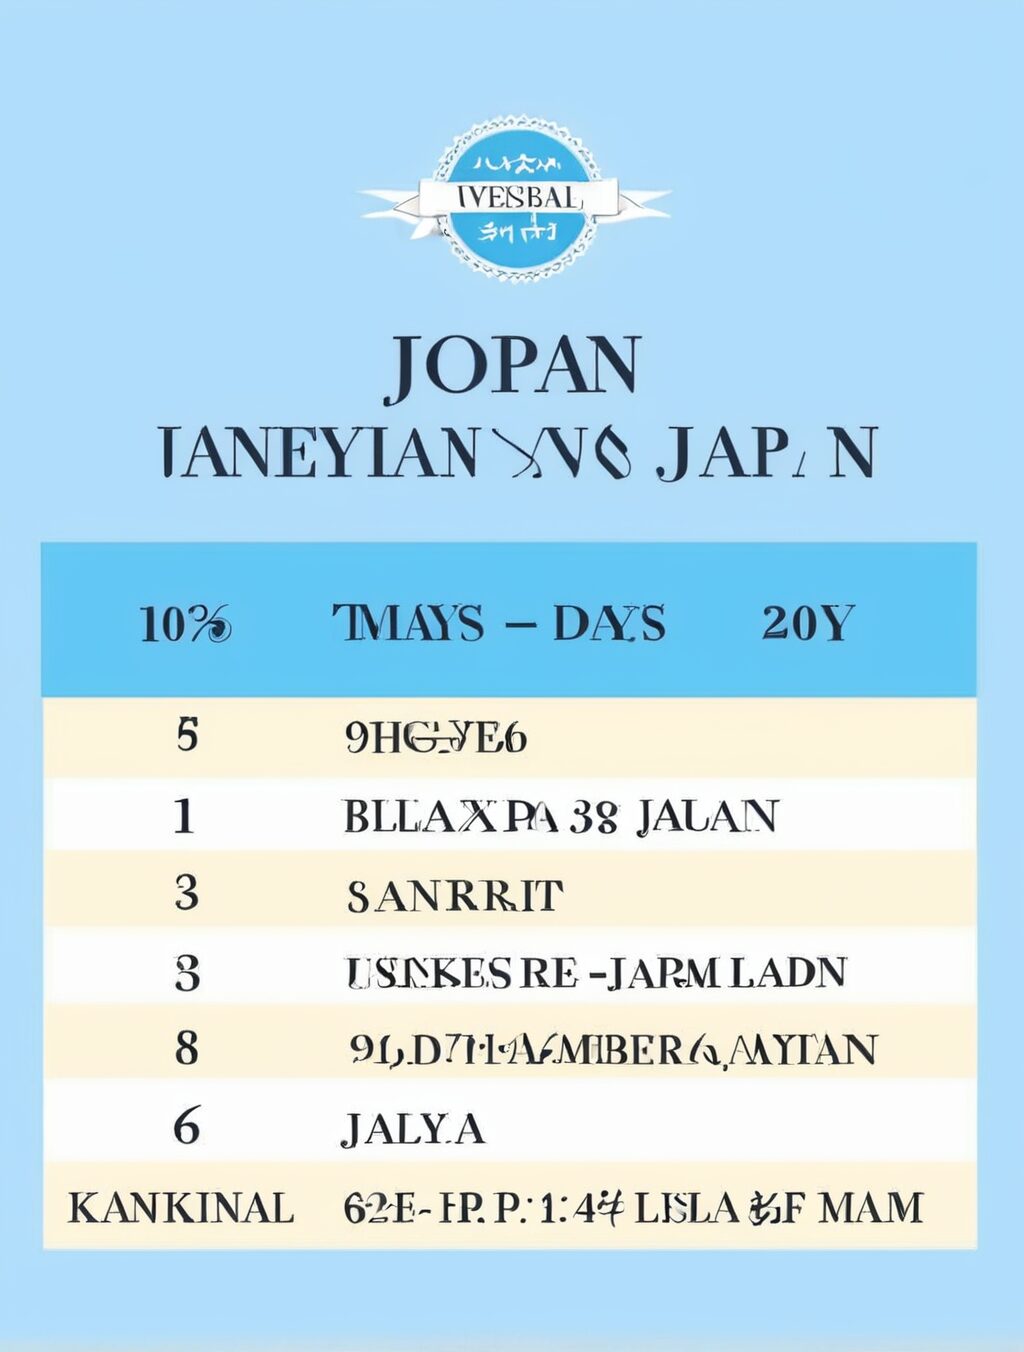 japan itinerary 6 days